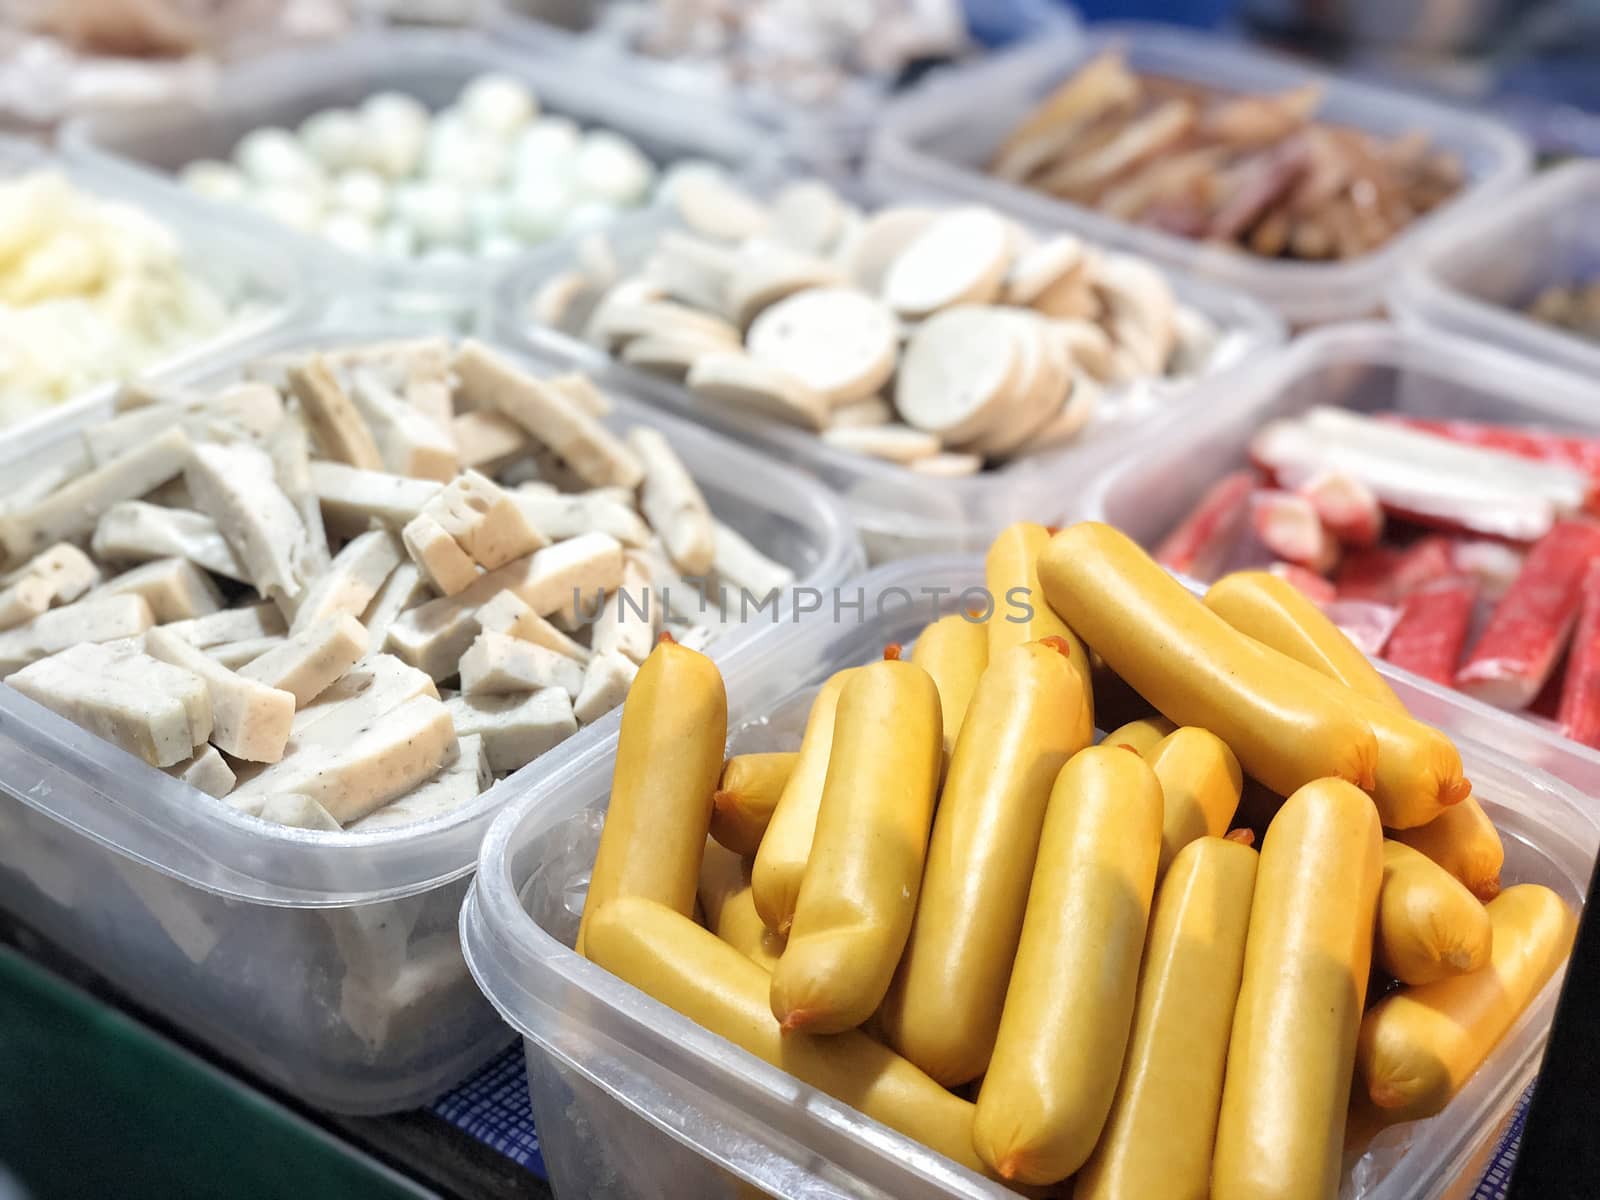 Ingredient for spicy salad: Vietnamese pork sausage, dory fish fillet, calamari, and meatballs in plastic food boxes